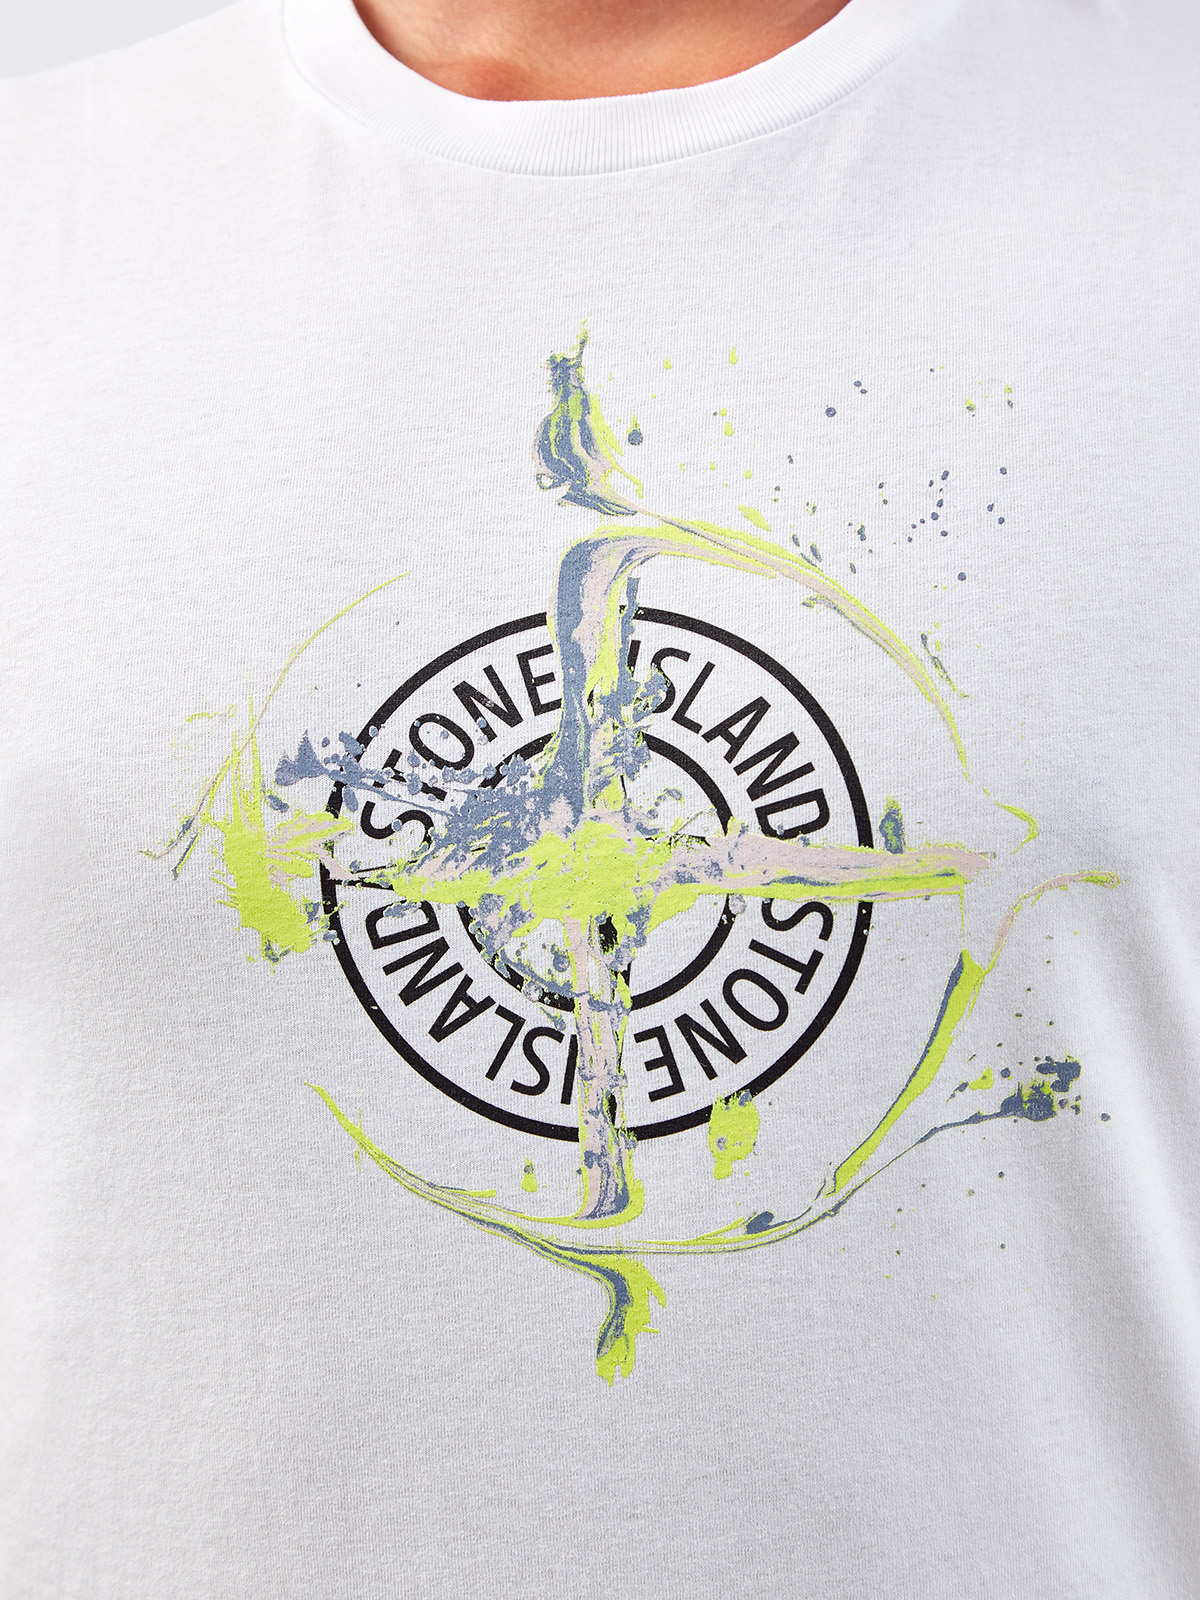 Белая футболка из джерси с яркой аппликацией STONE ISLAND, цвет белый, размер S;M;L;XL;2XL;3XL - фото 5